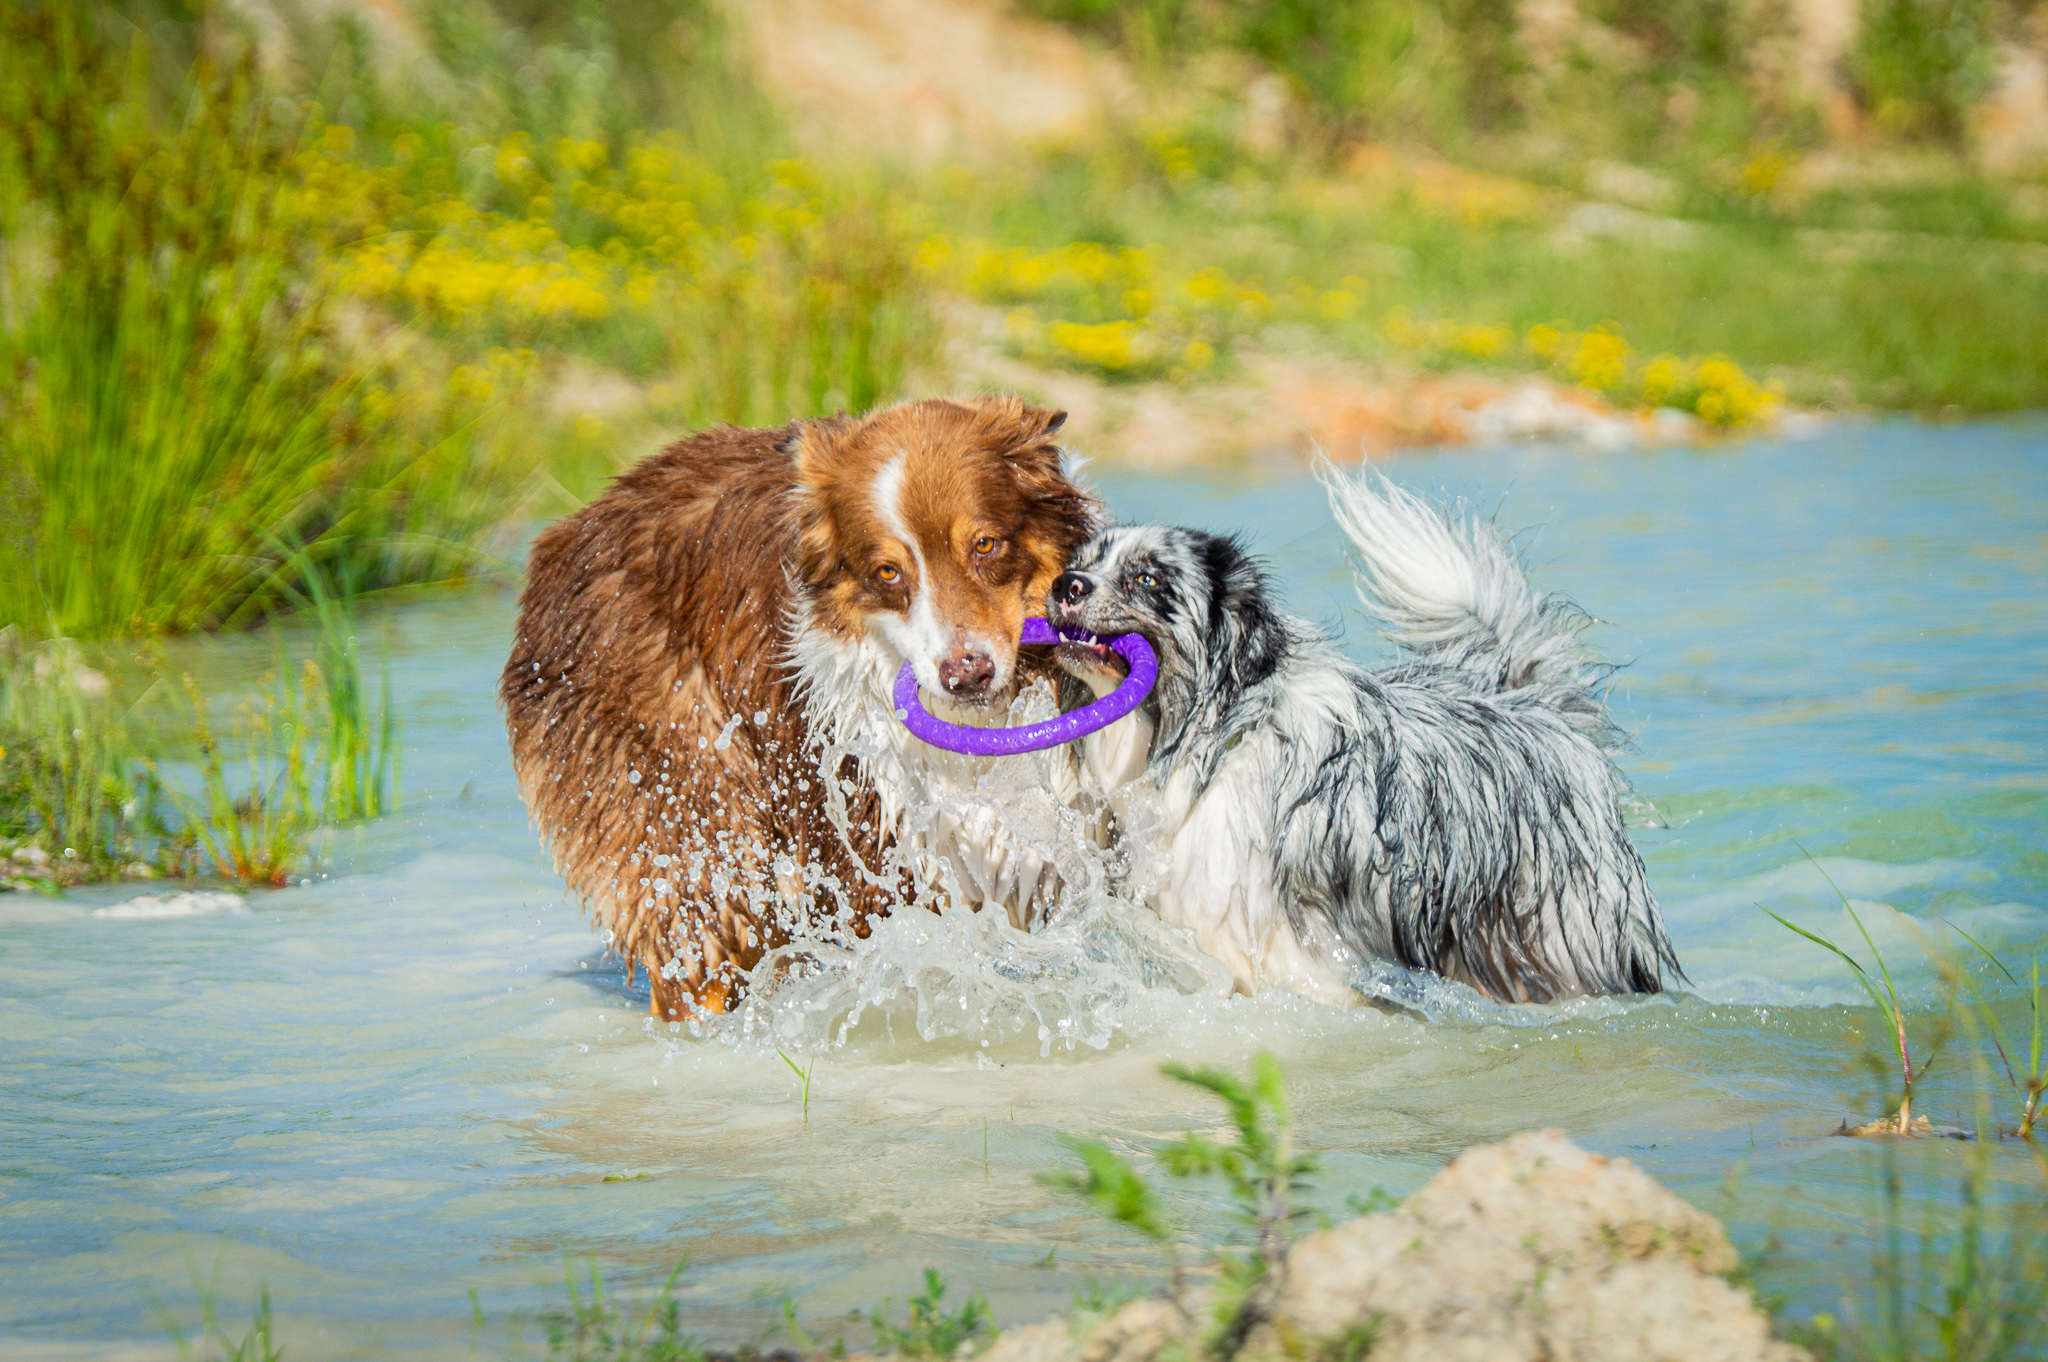 dva psy sa hraj vo vode, leto so psom